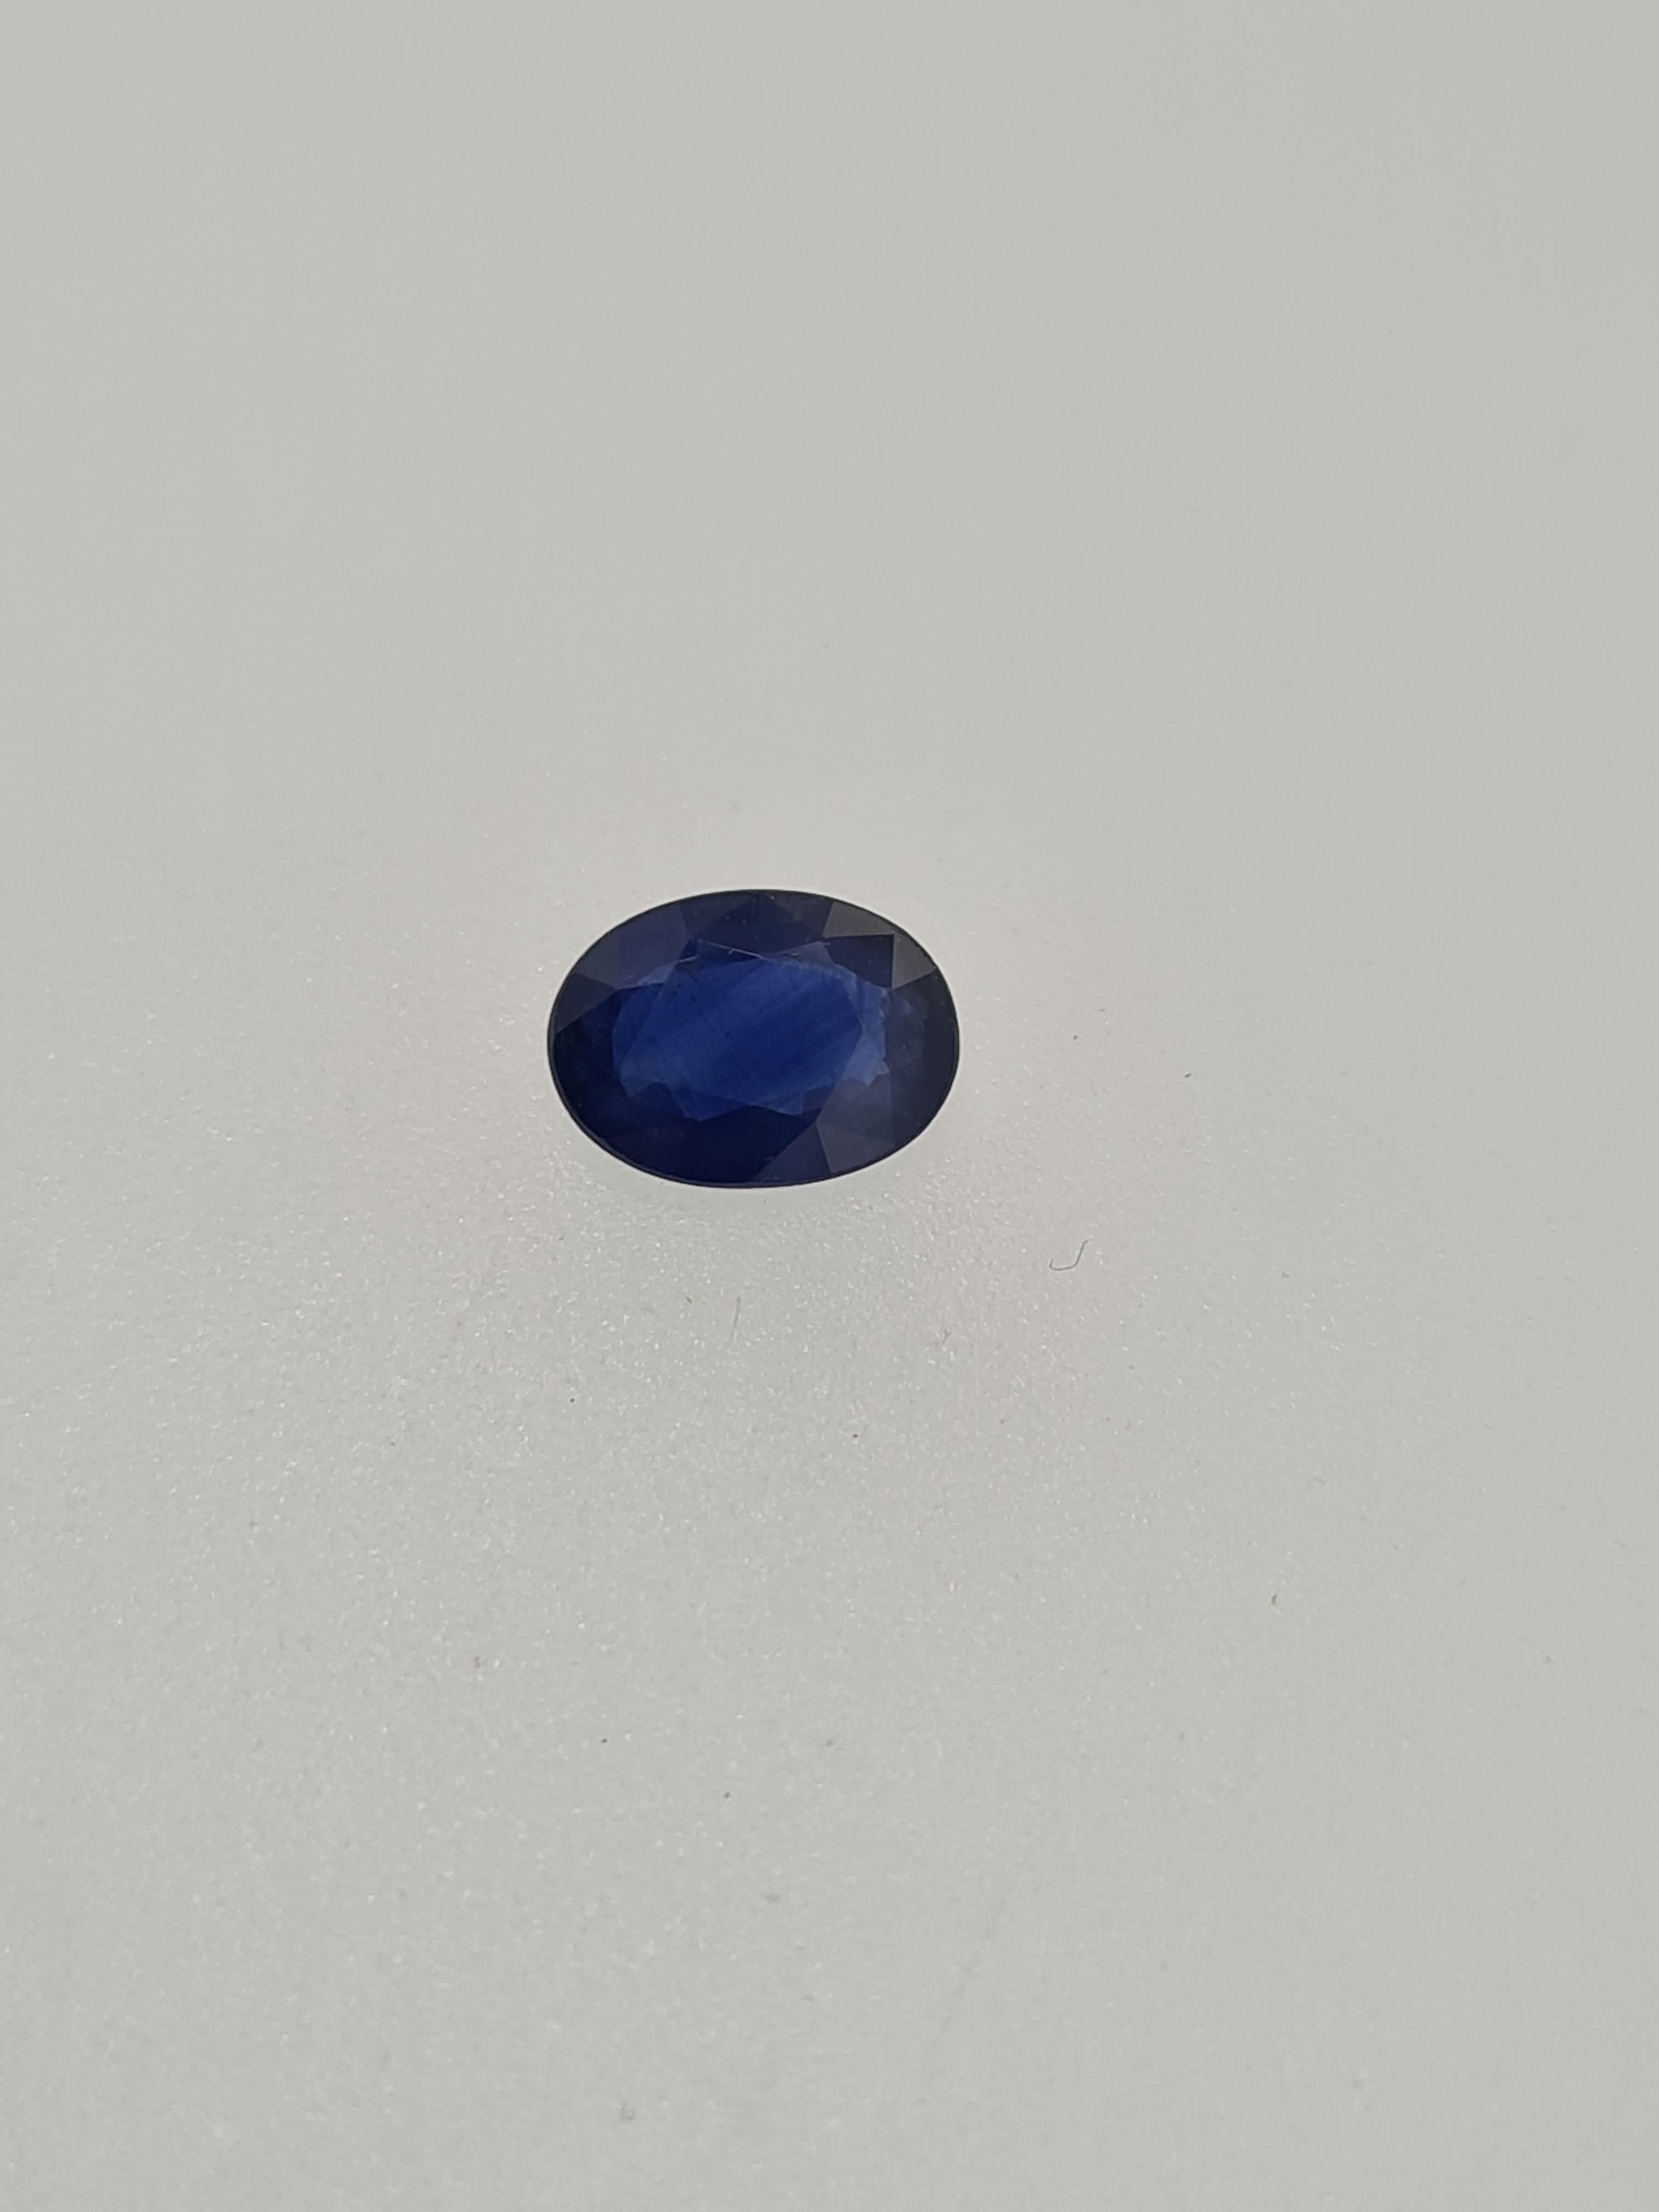 Oval cut sapphire gem stone - Image 3 of 4